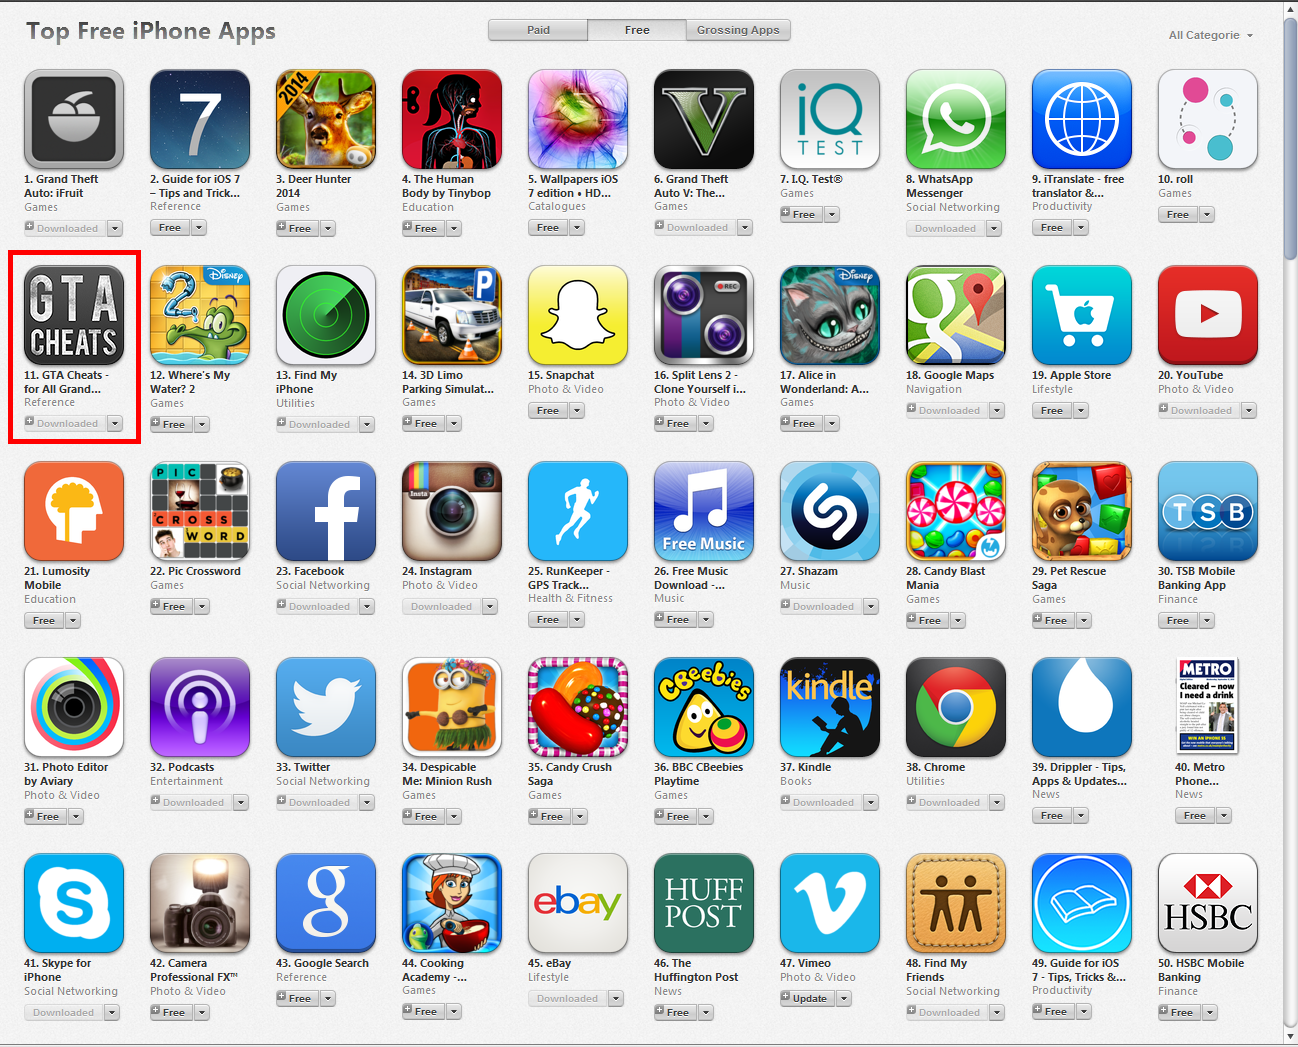 GTACheats-iOS-11th-Top-Free-App.png